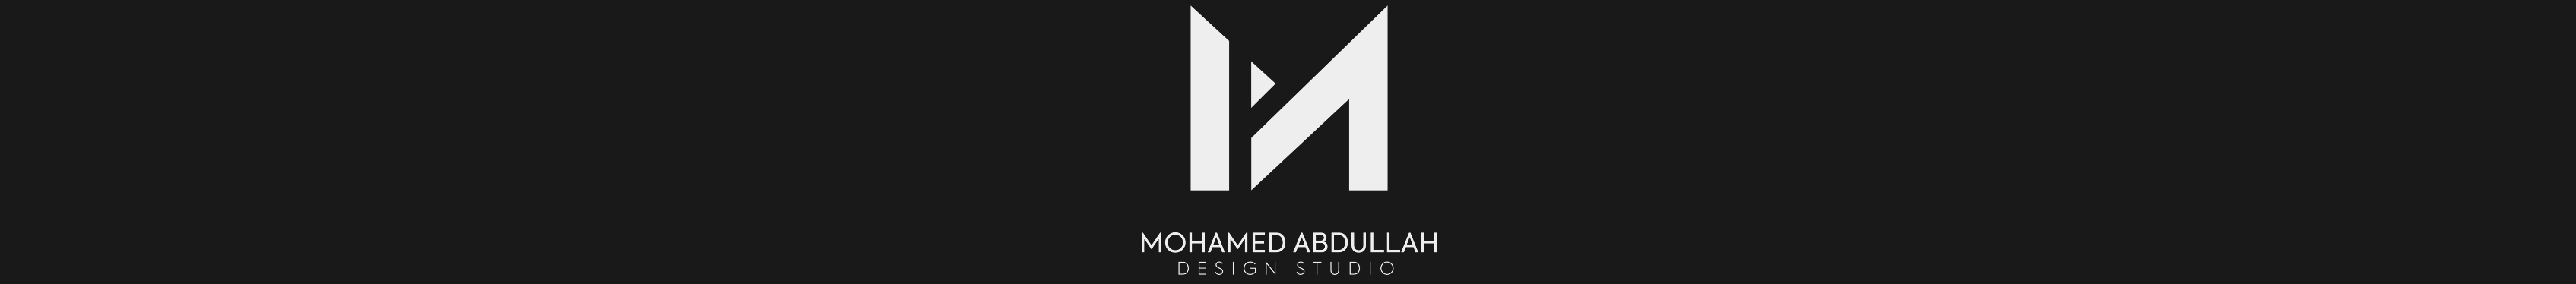 Profielbanner van Muhammed Abdallah